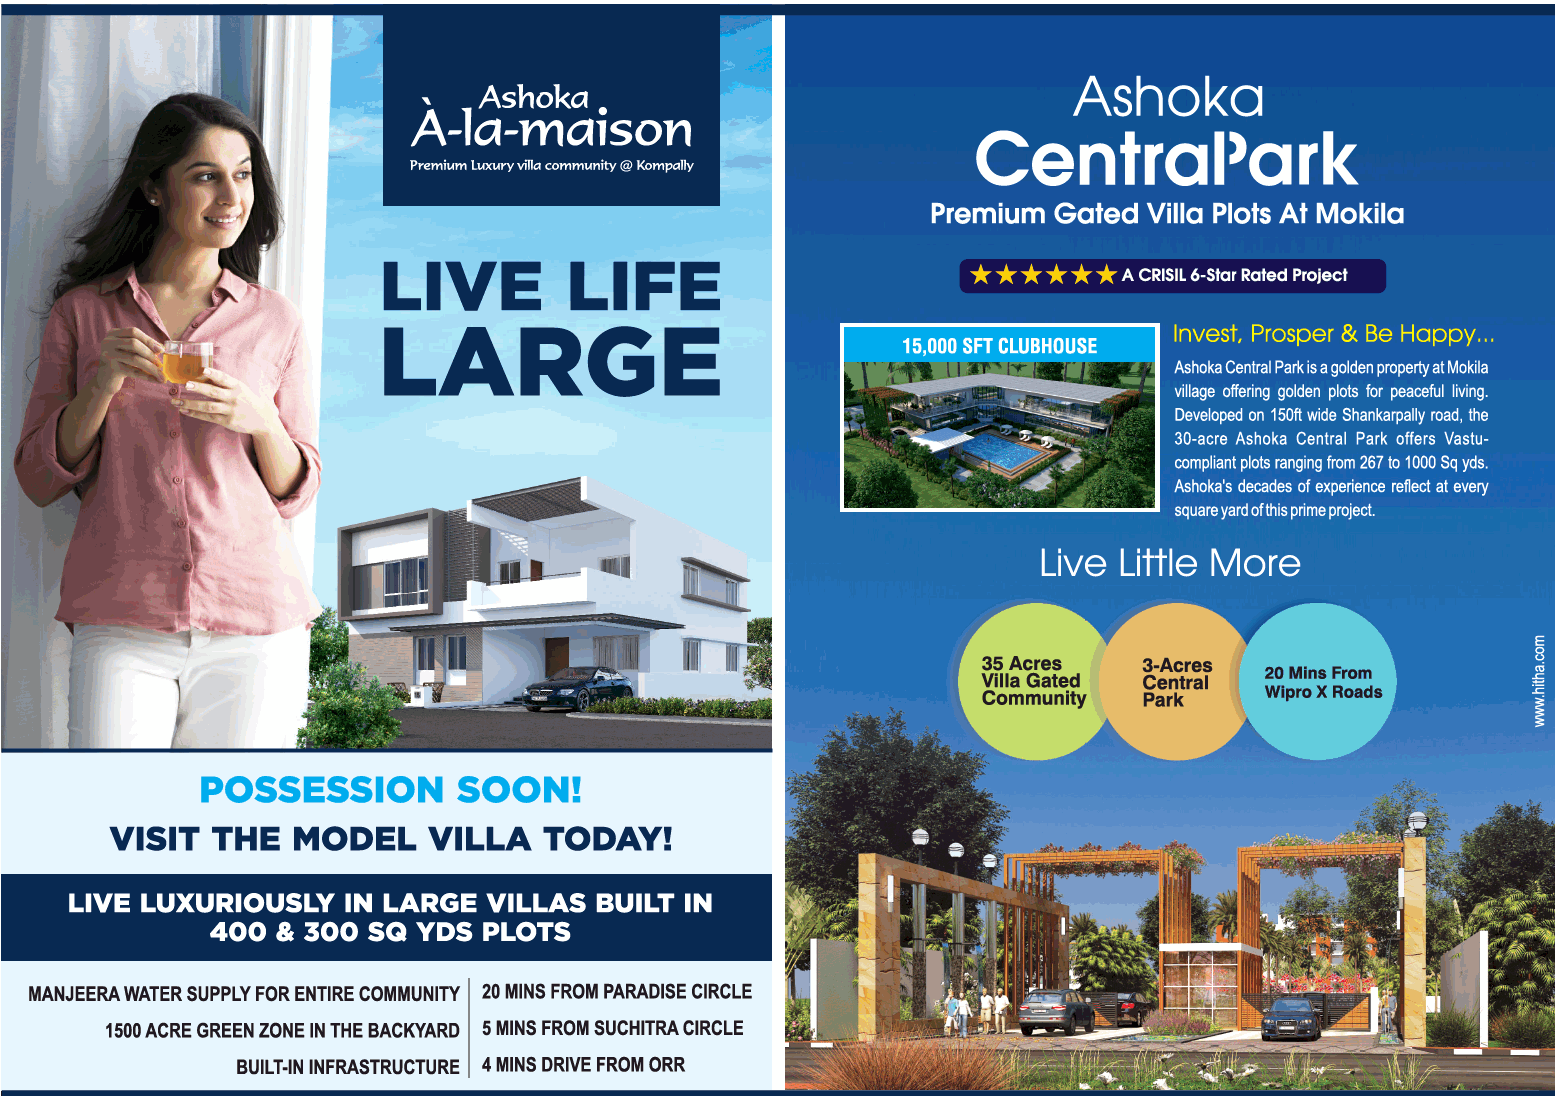 Live Life Large at Ashoka Projects in Hyderabad